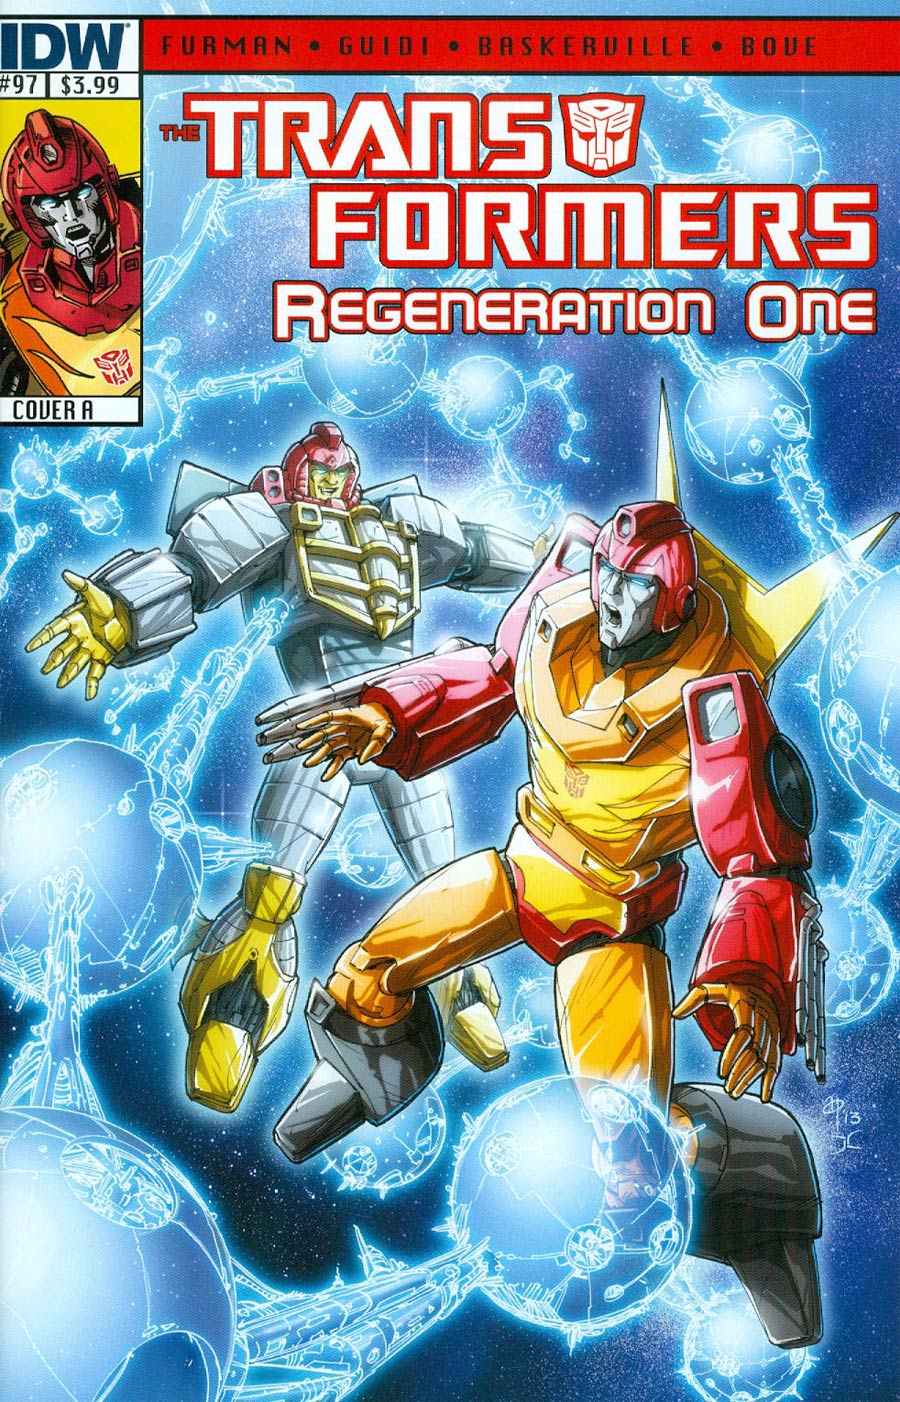 Transformers Regeneration One #97 Cover A Regular Andrew Wildman Cover